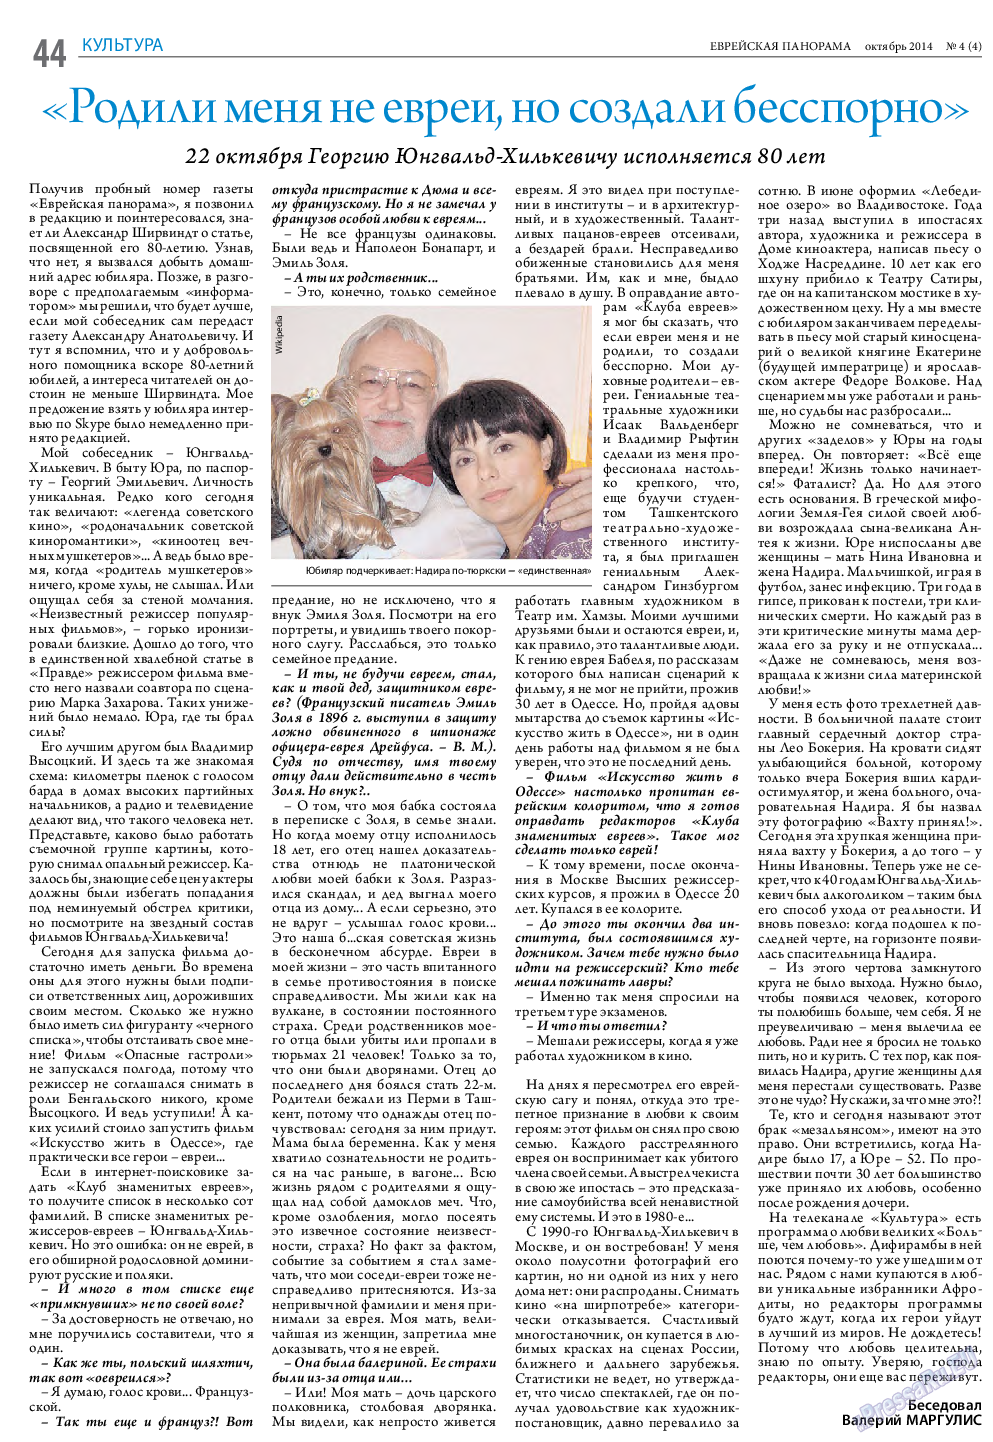 Еврейская панорама, газета. 2014 №4 стр.44